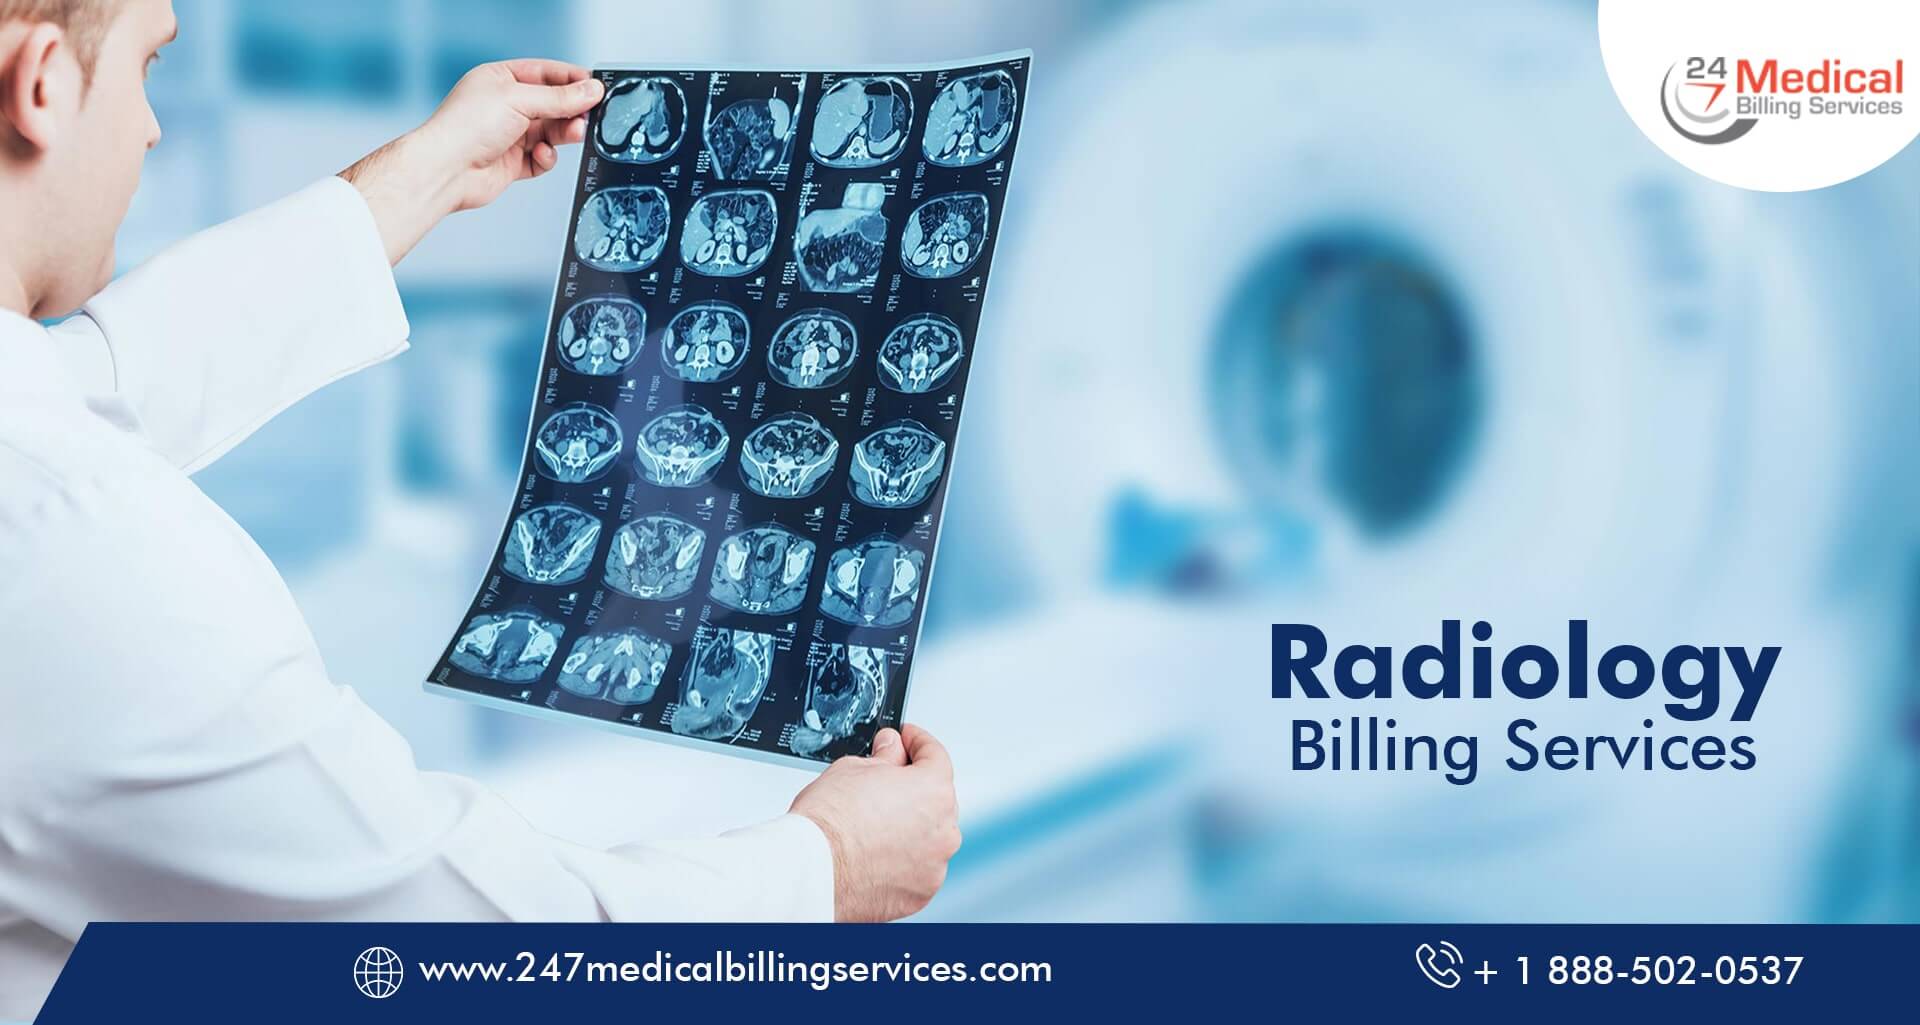  Radiology Billing Services in Boston, Massachusetts (MA)